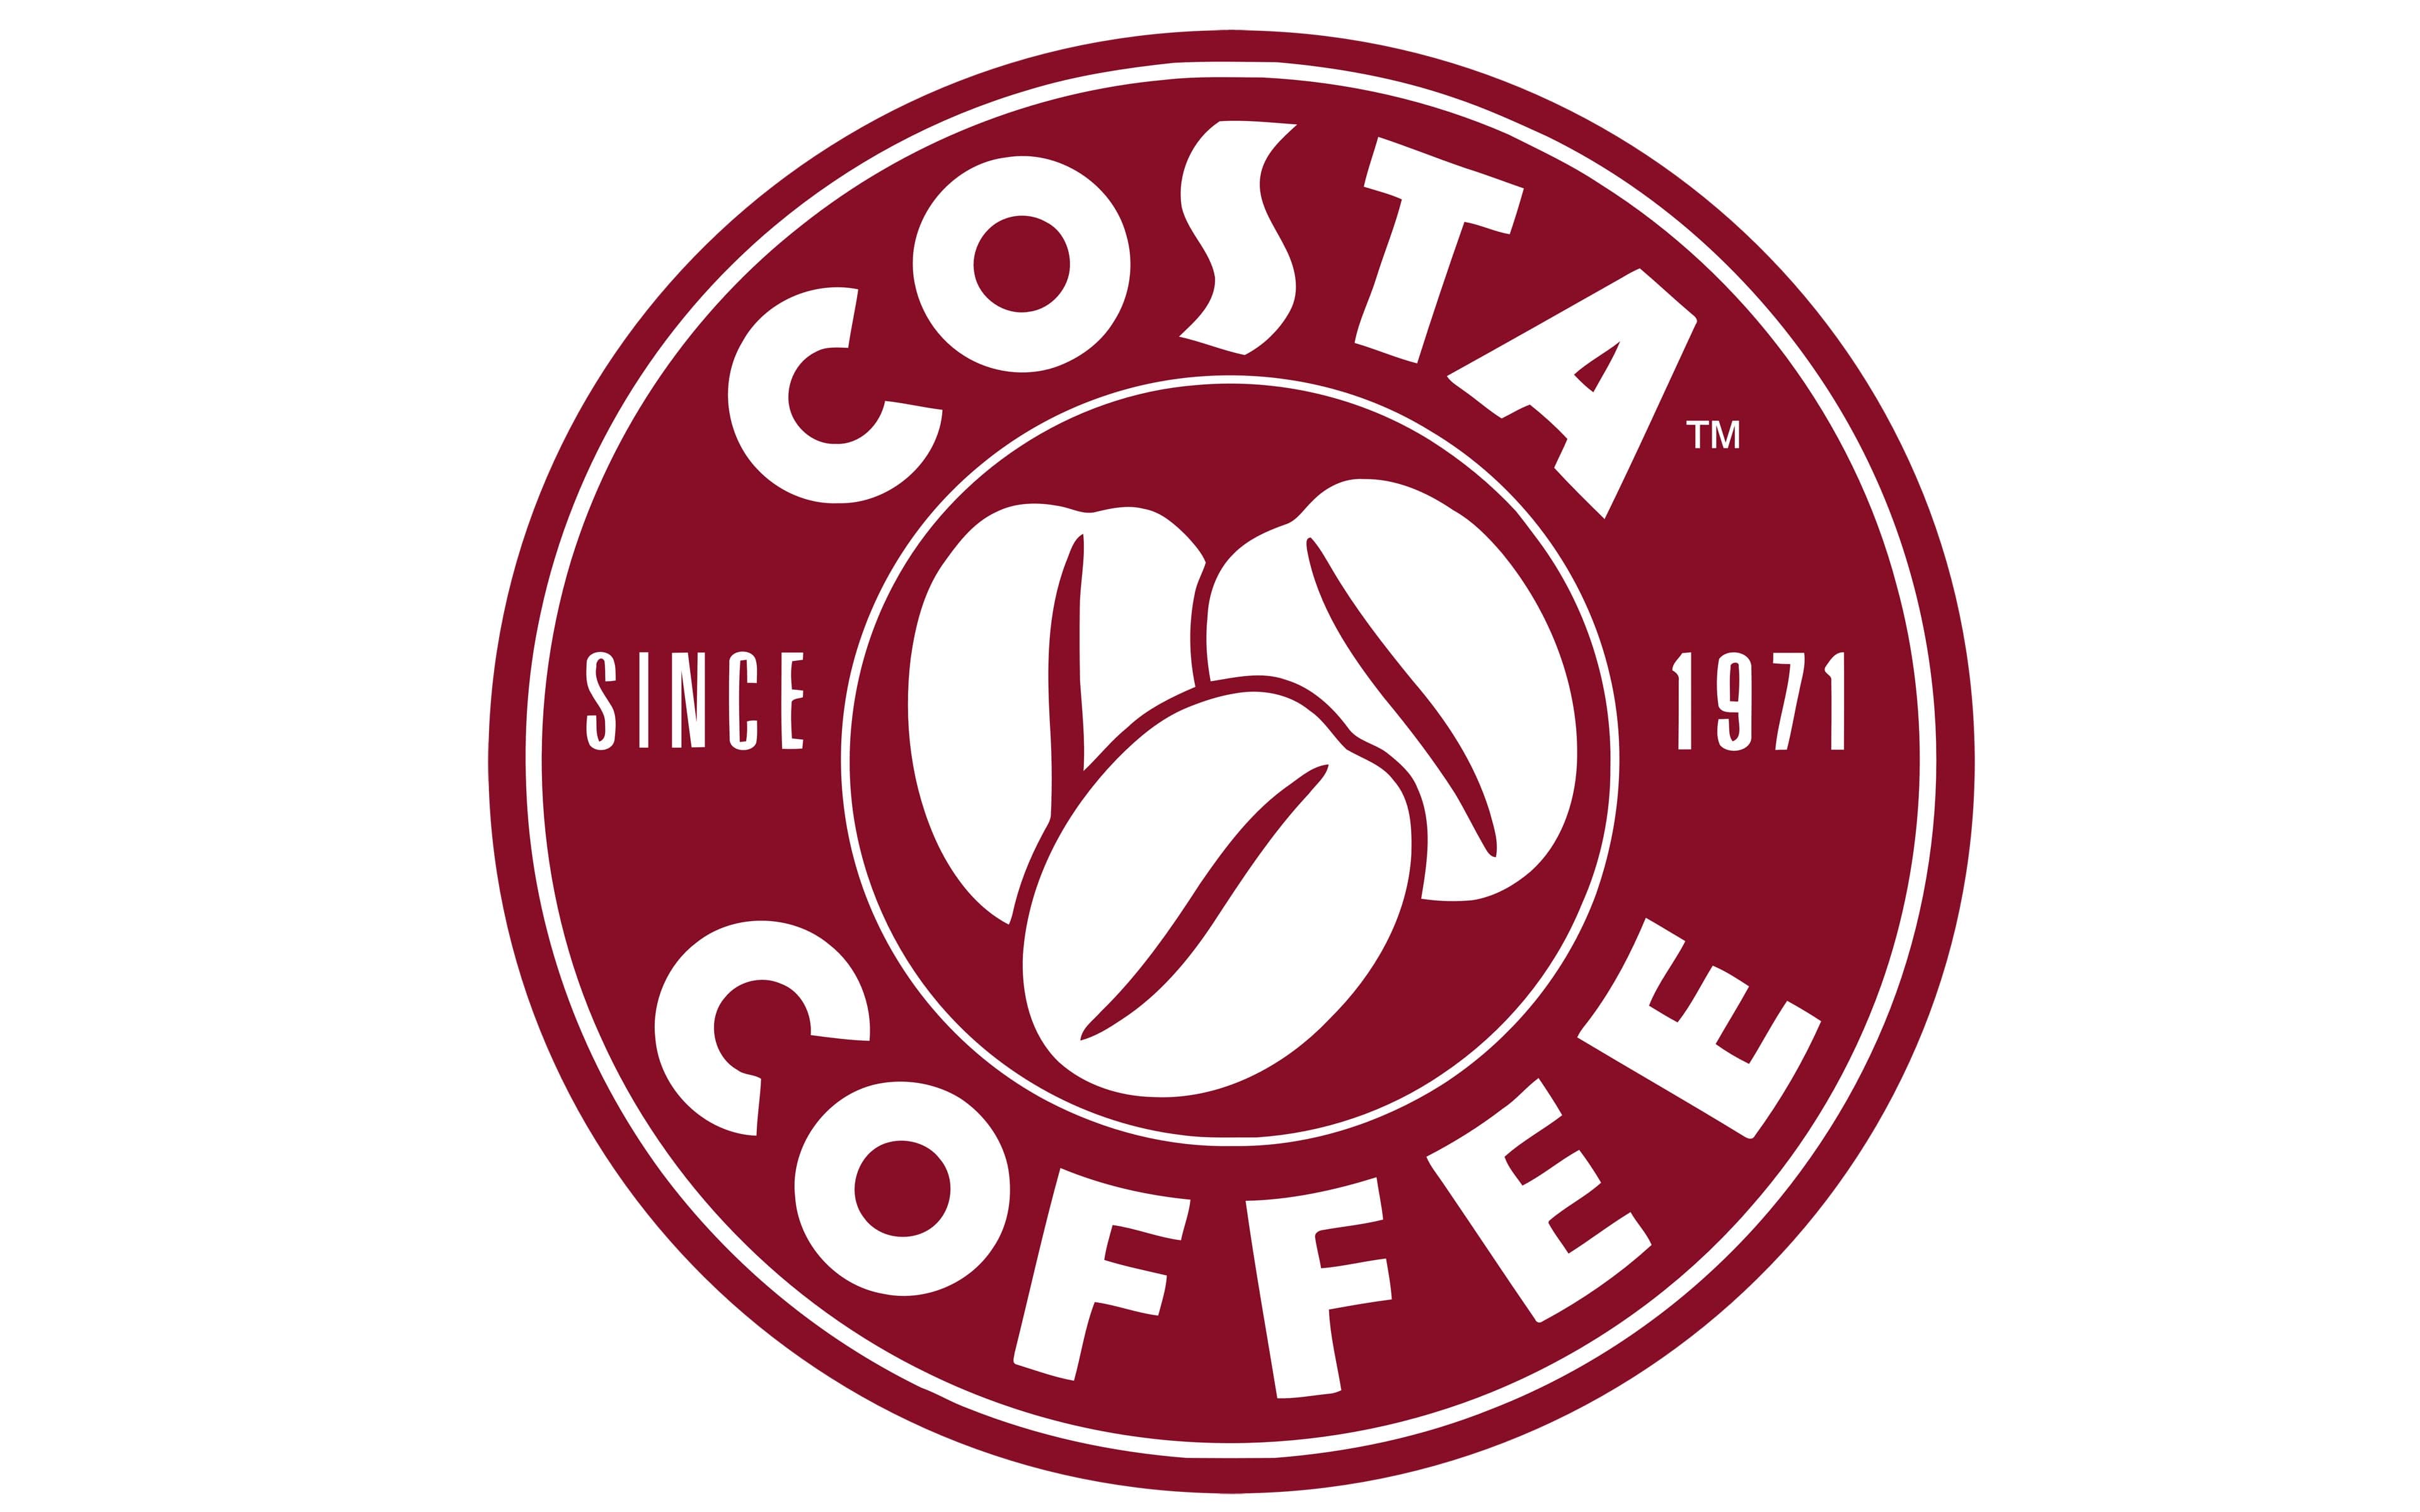 coffee brand logo